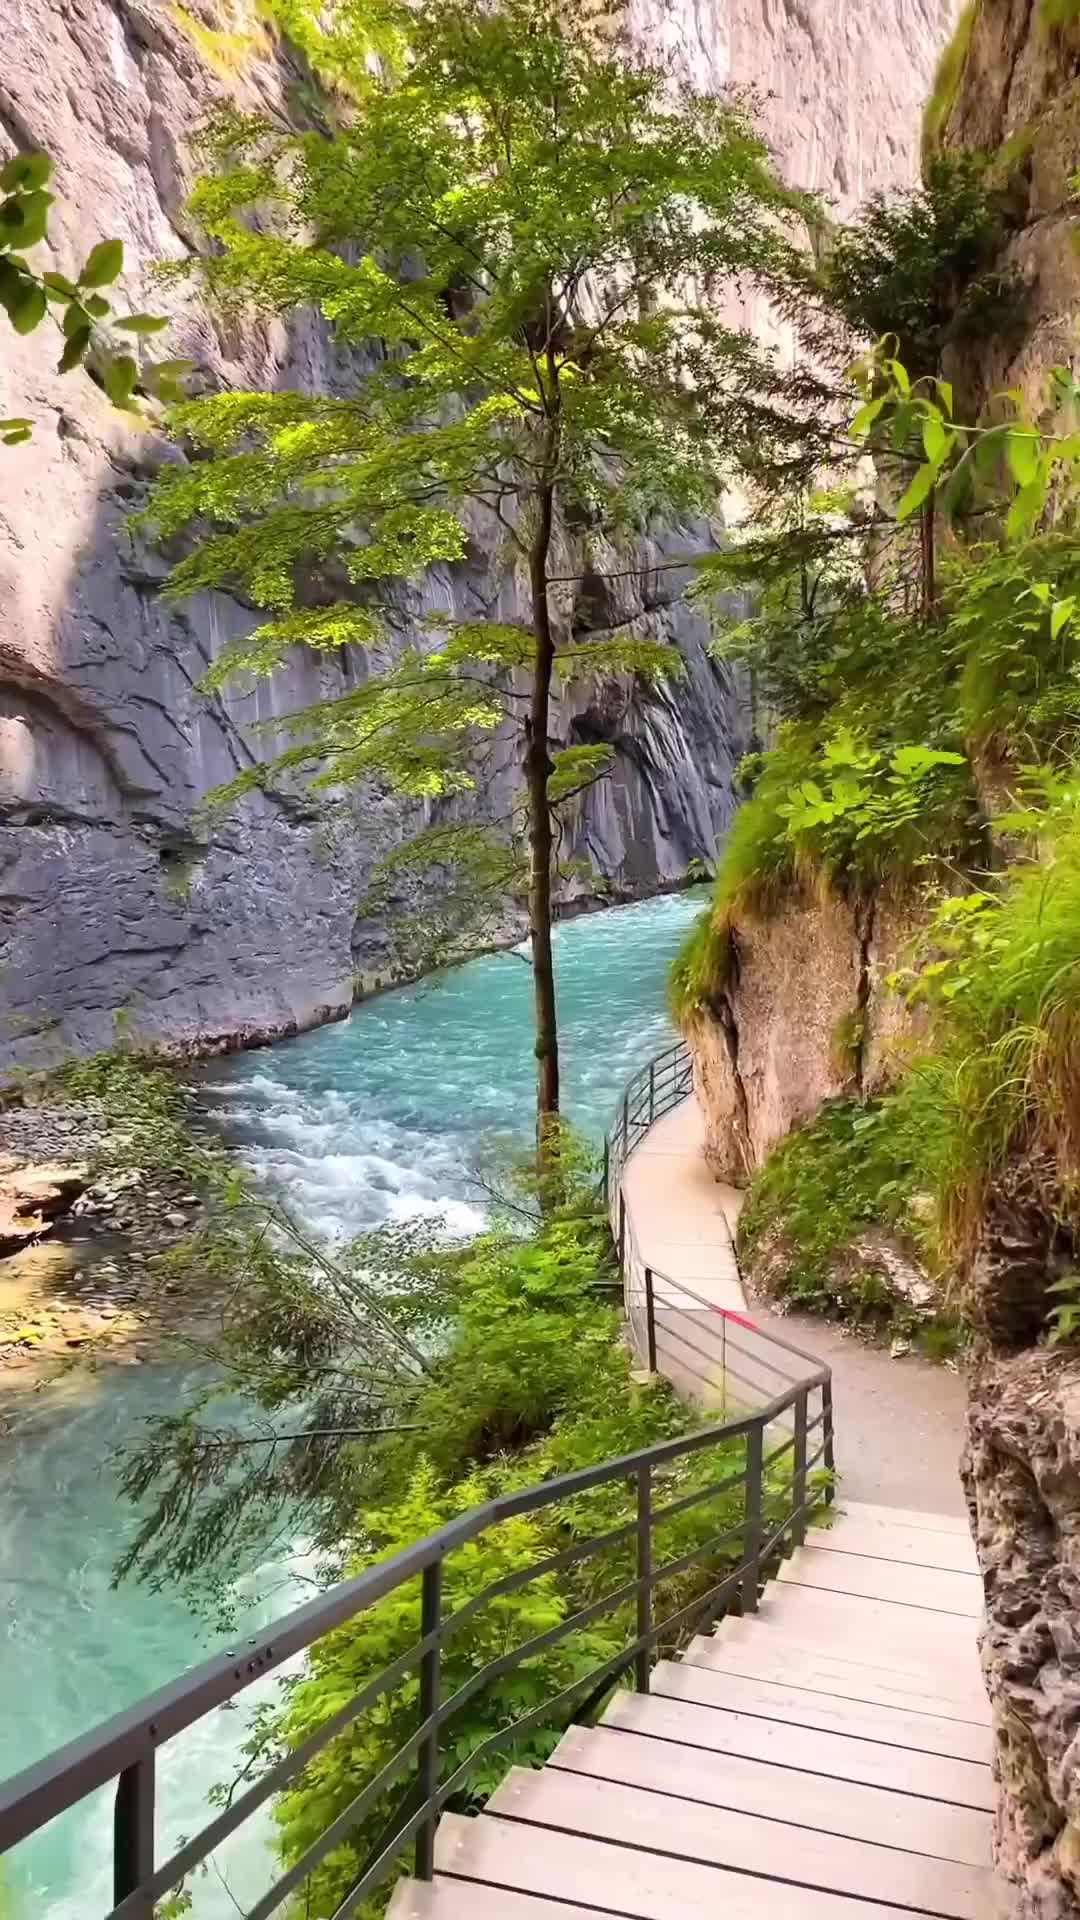 Explore Aare Gorge: Stunning Nature in Bern, Switzerland